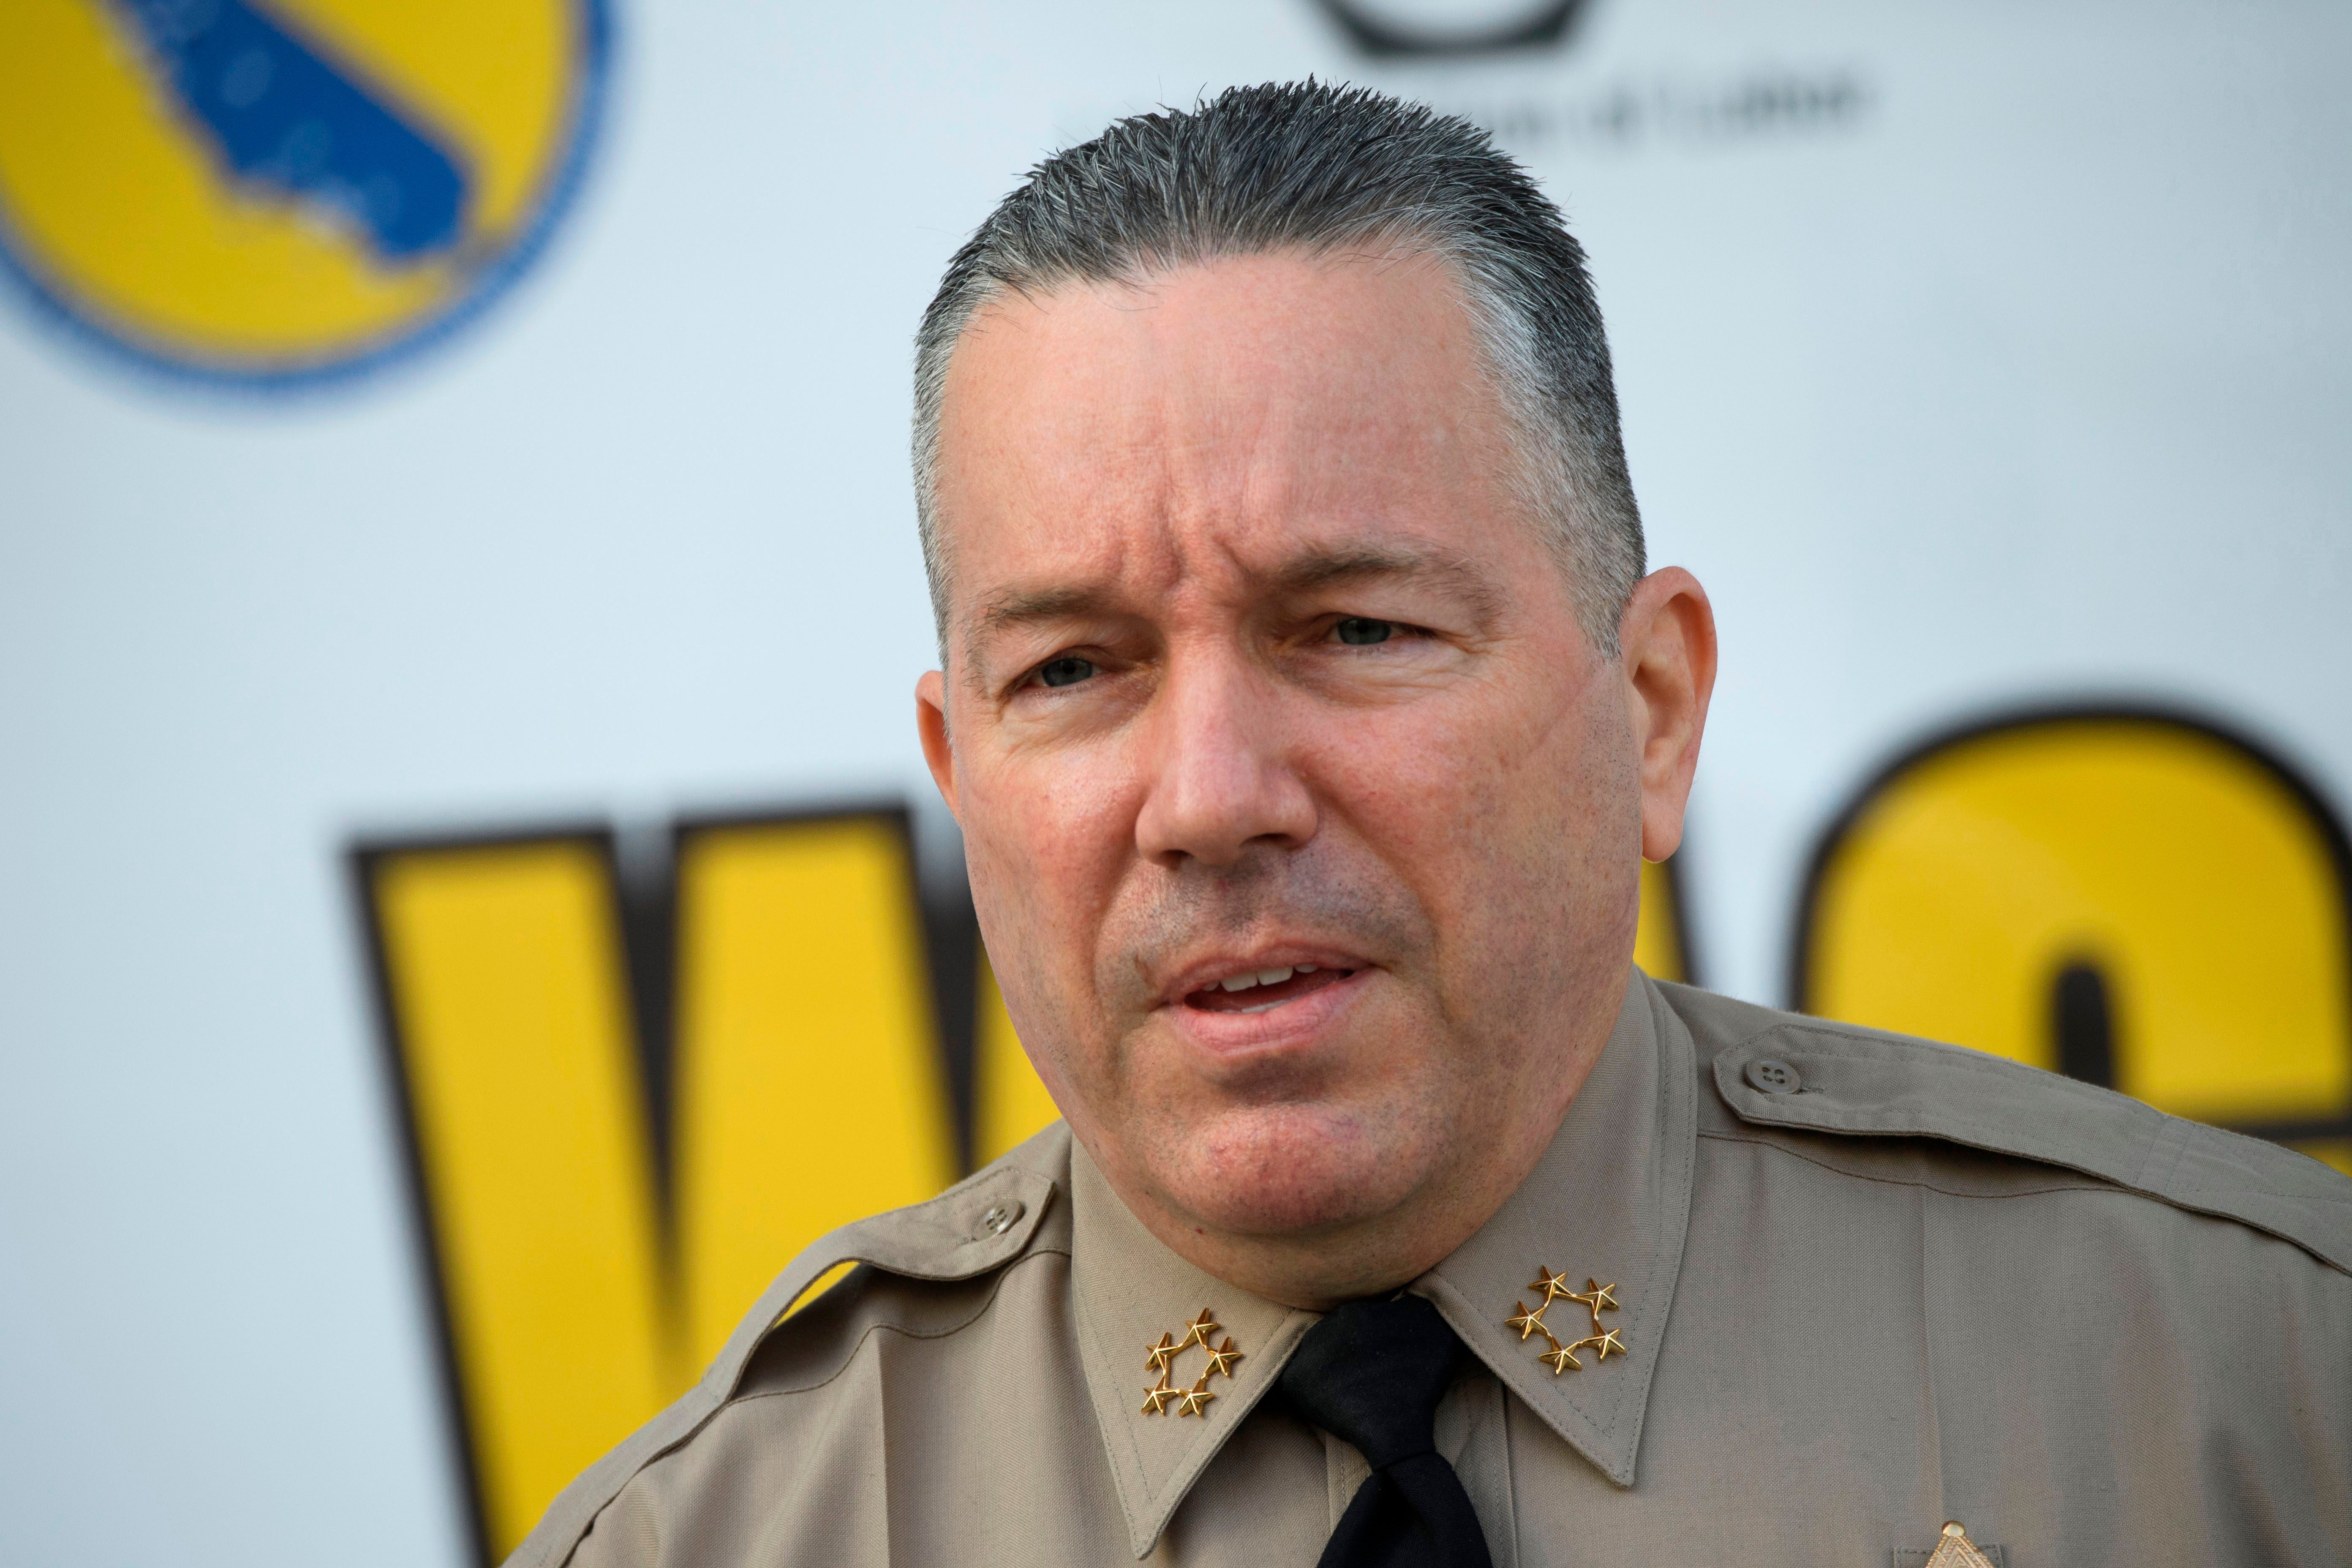 Sheriff Alex Villanueva insists he is seeking to confront gangs